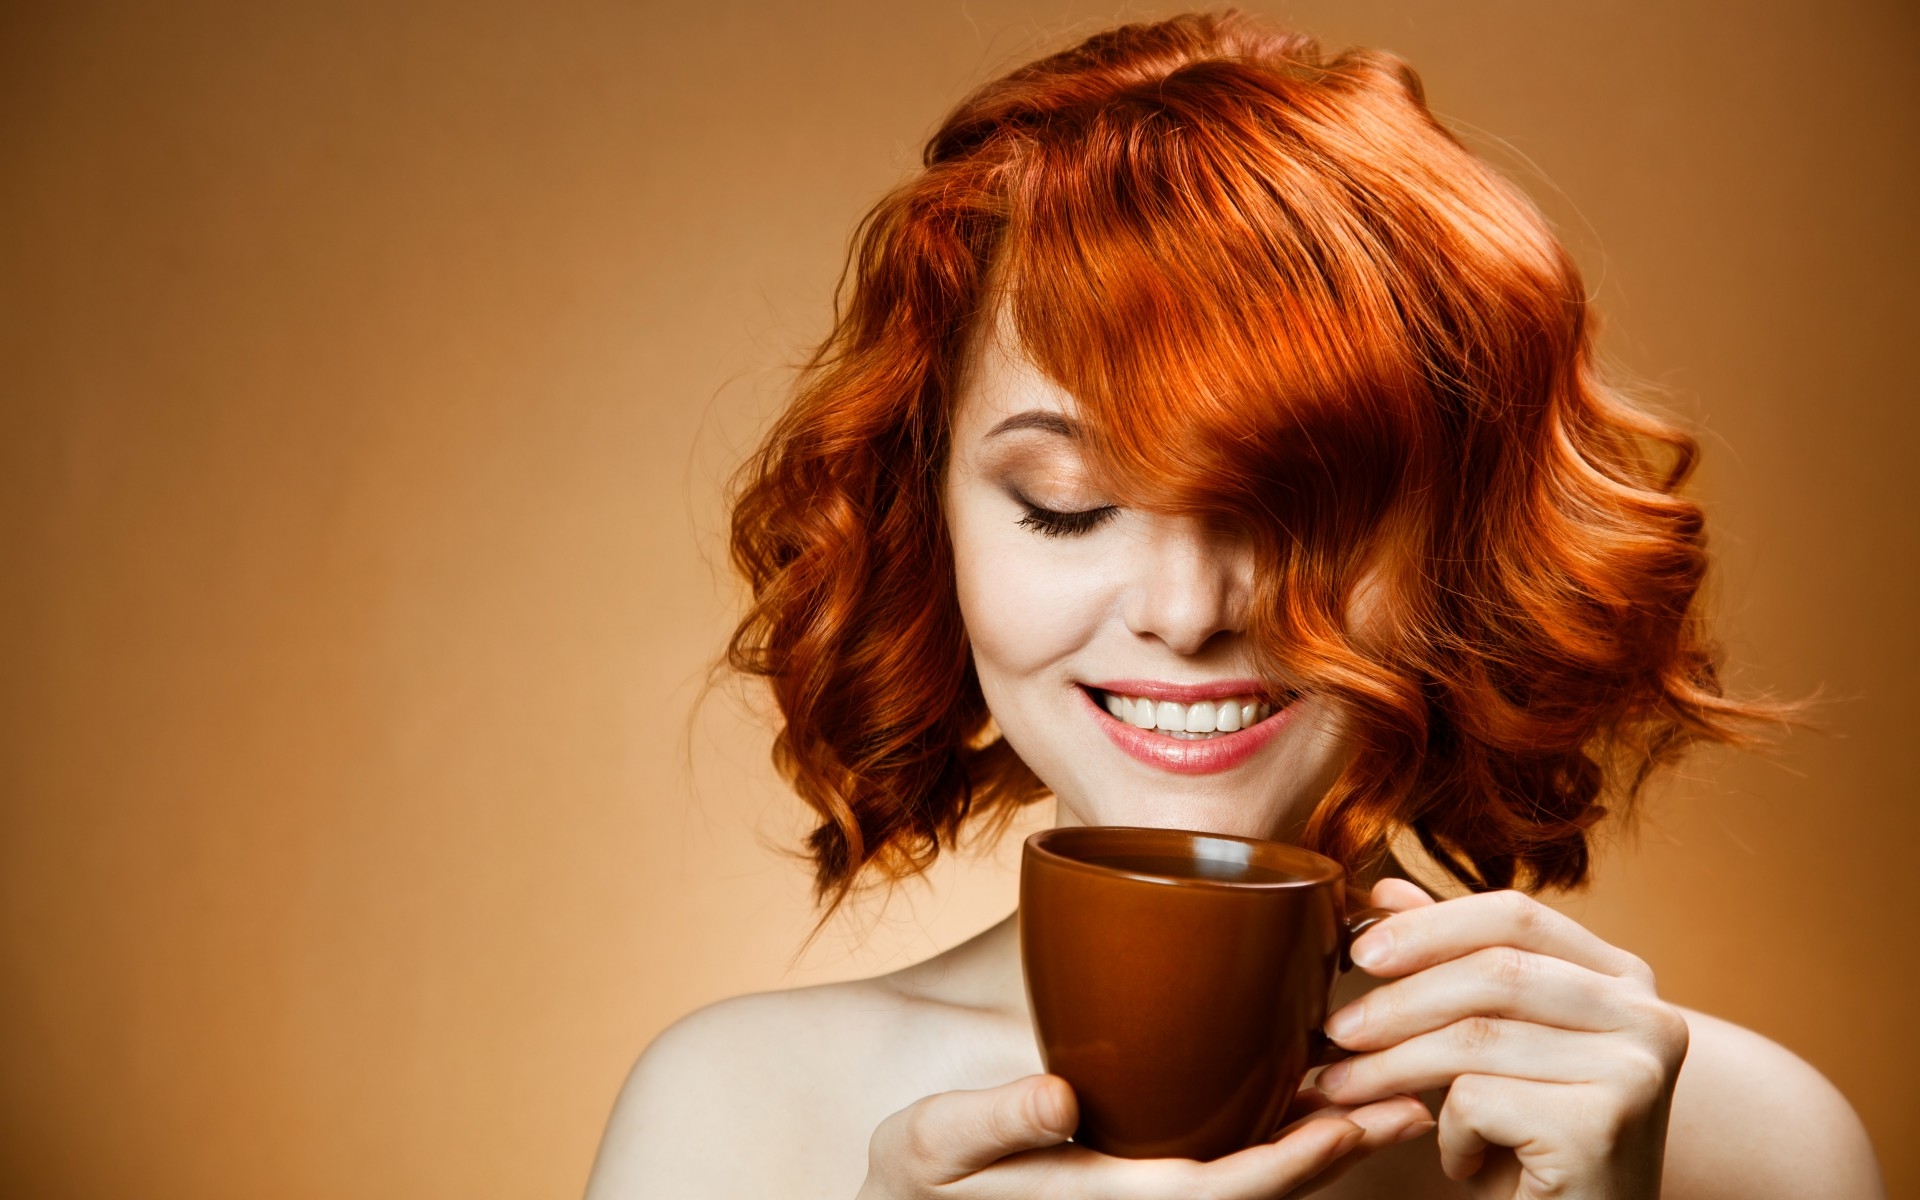 Smile Redhead Girl Drink Coffee Wallpaper